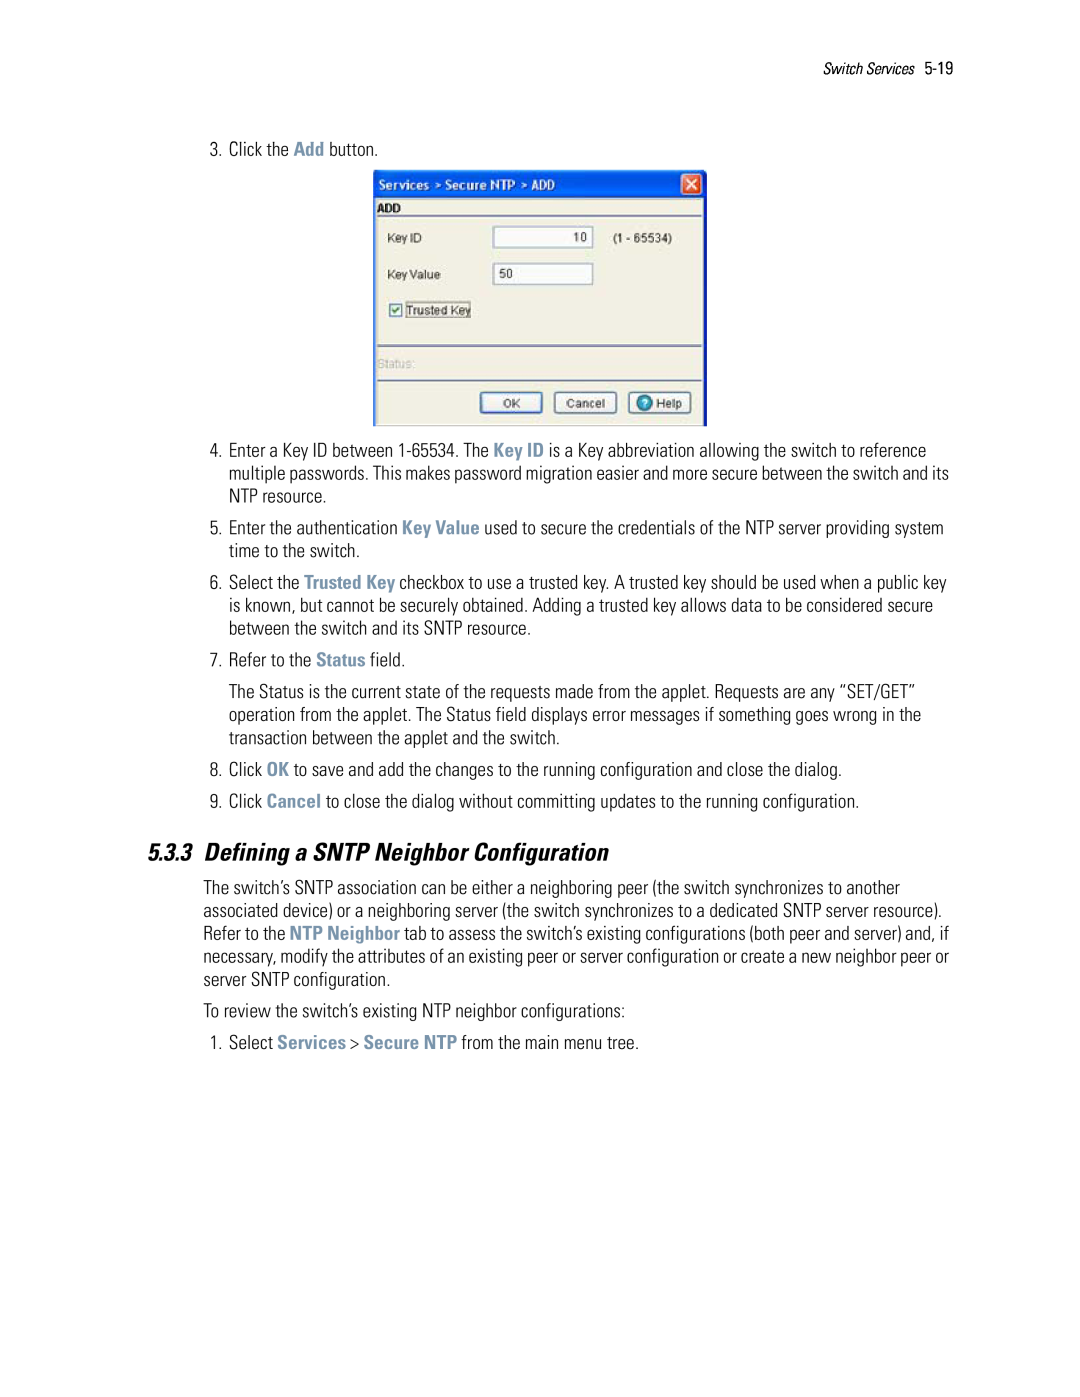 Motorola WS5100 manual 5.3.3Defining a SNTP Neighbor Configuration 